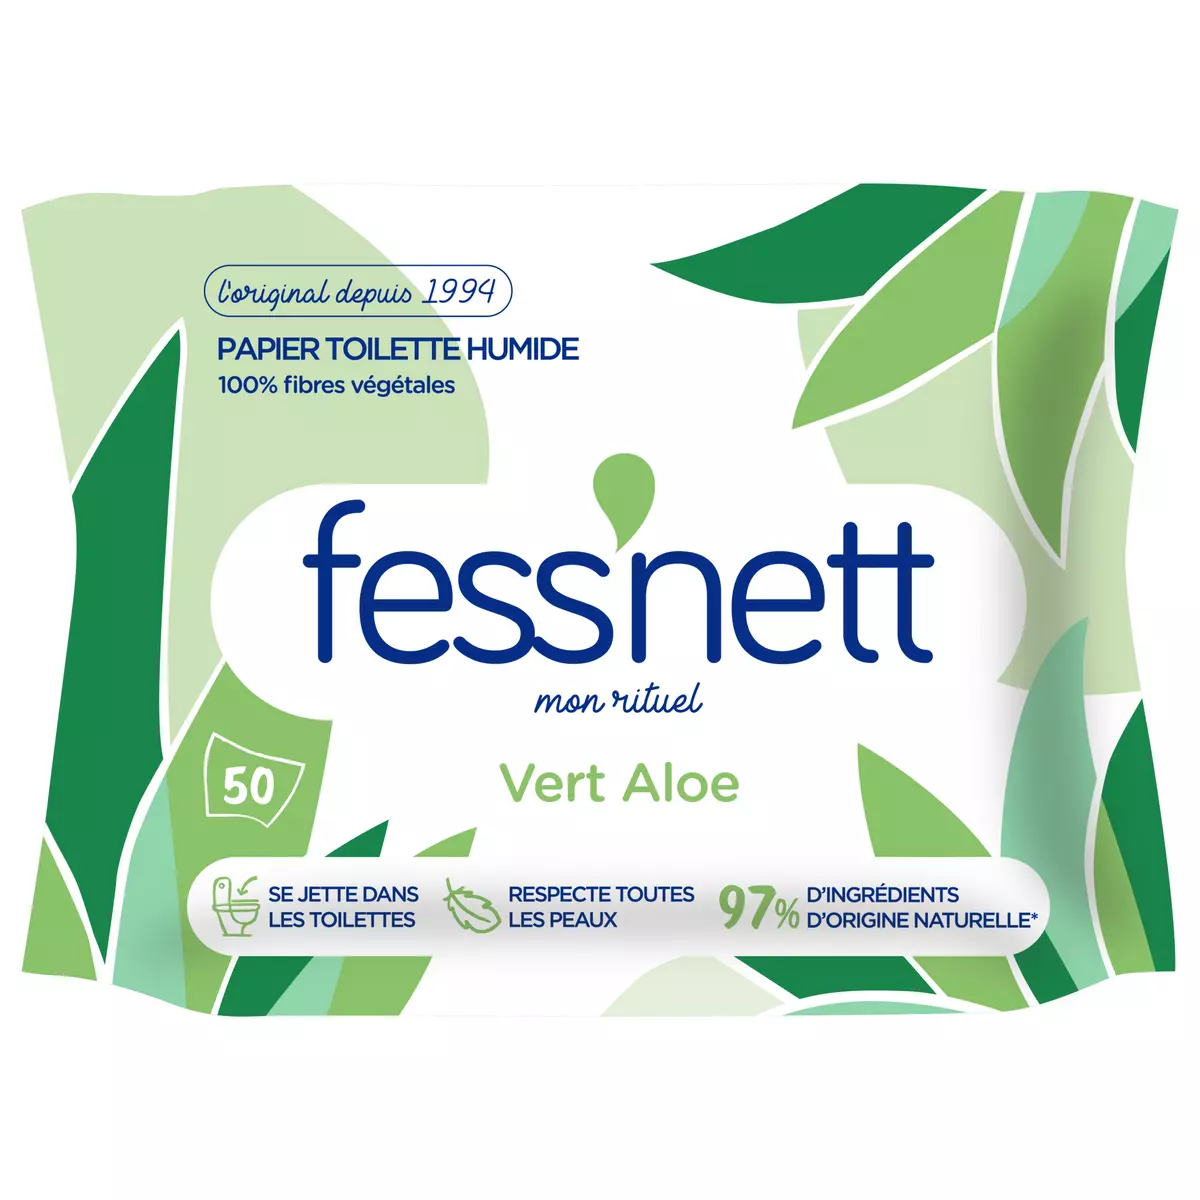 Papier WC humide, sensitive maxi format - Fess'nett